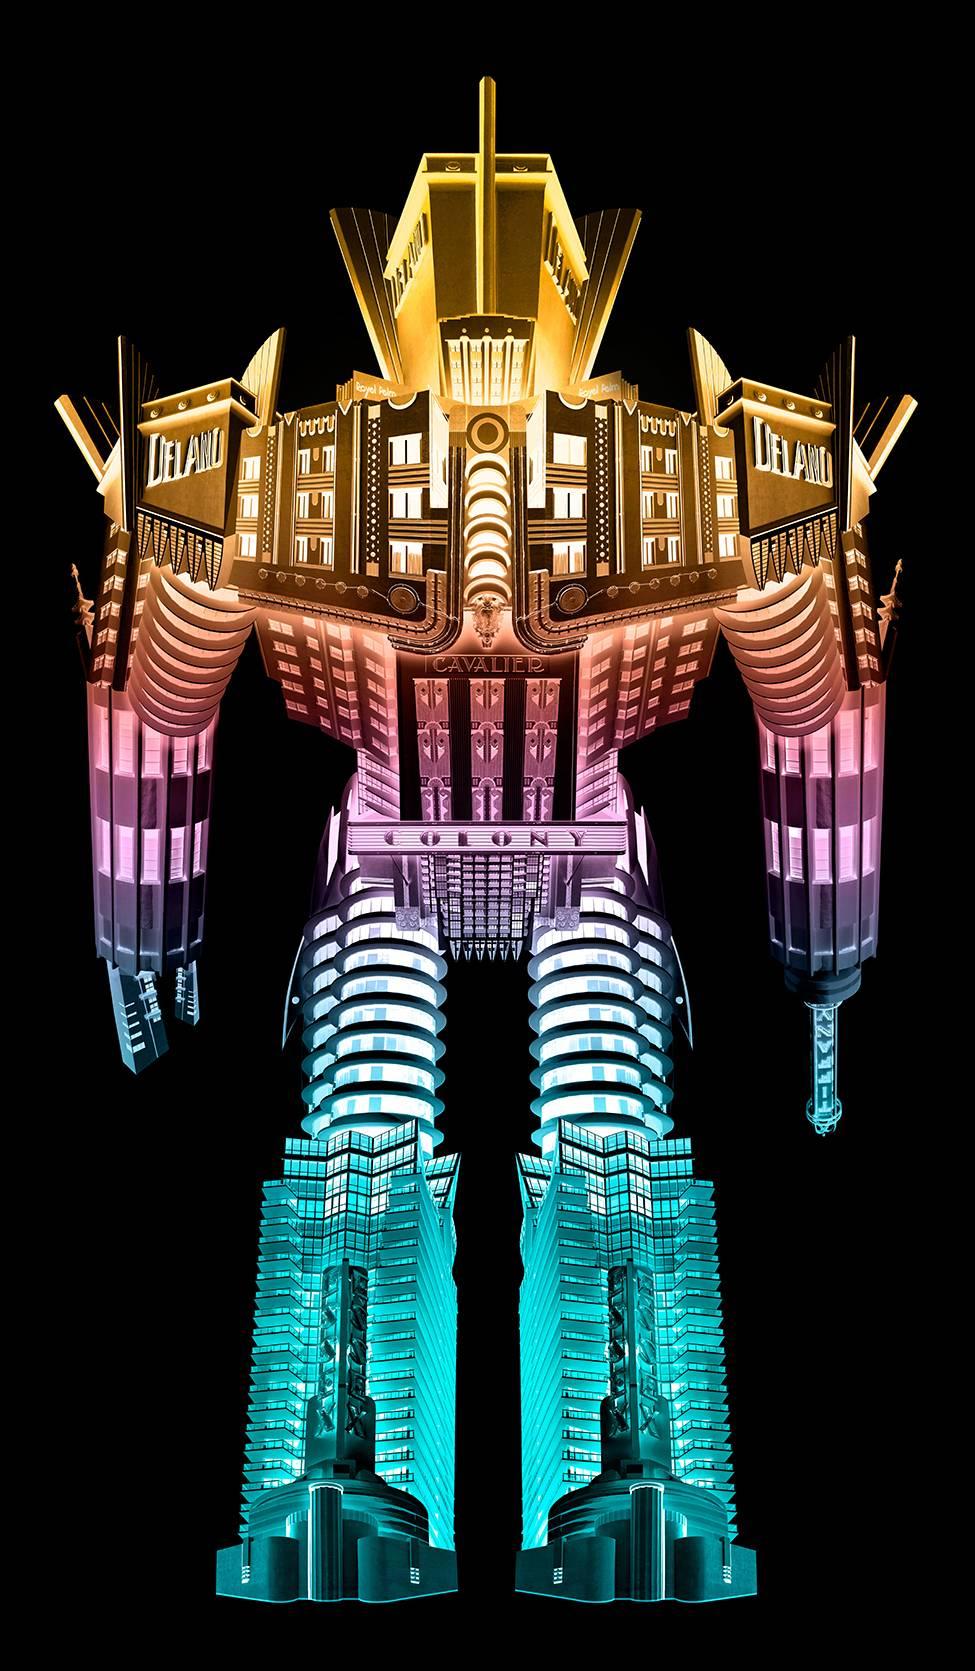 Joel Kuntz Color Photograph - Robot created with Miami buildings, gradient robot on black background